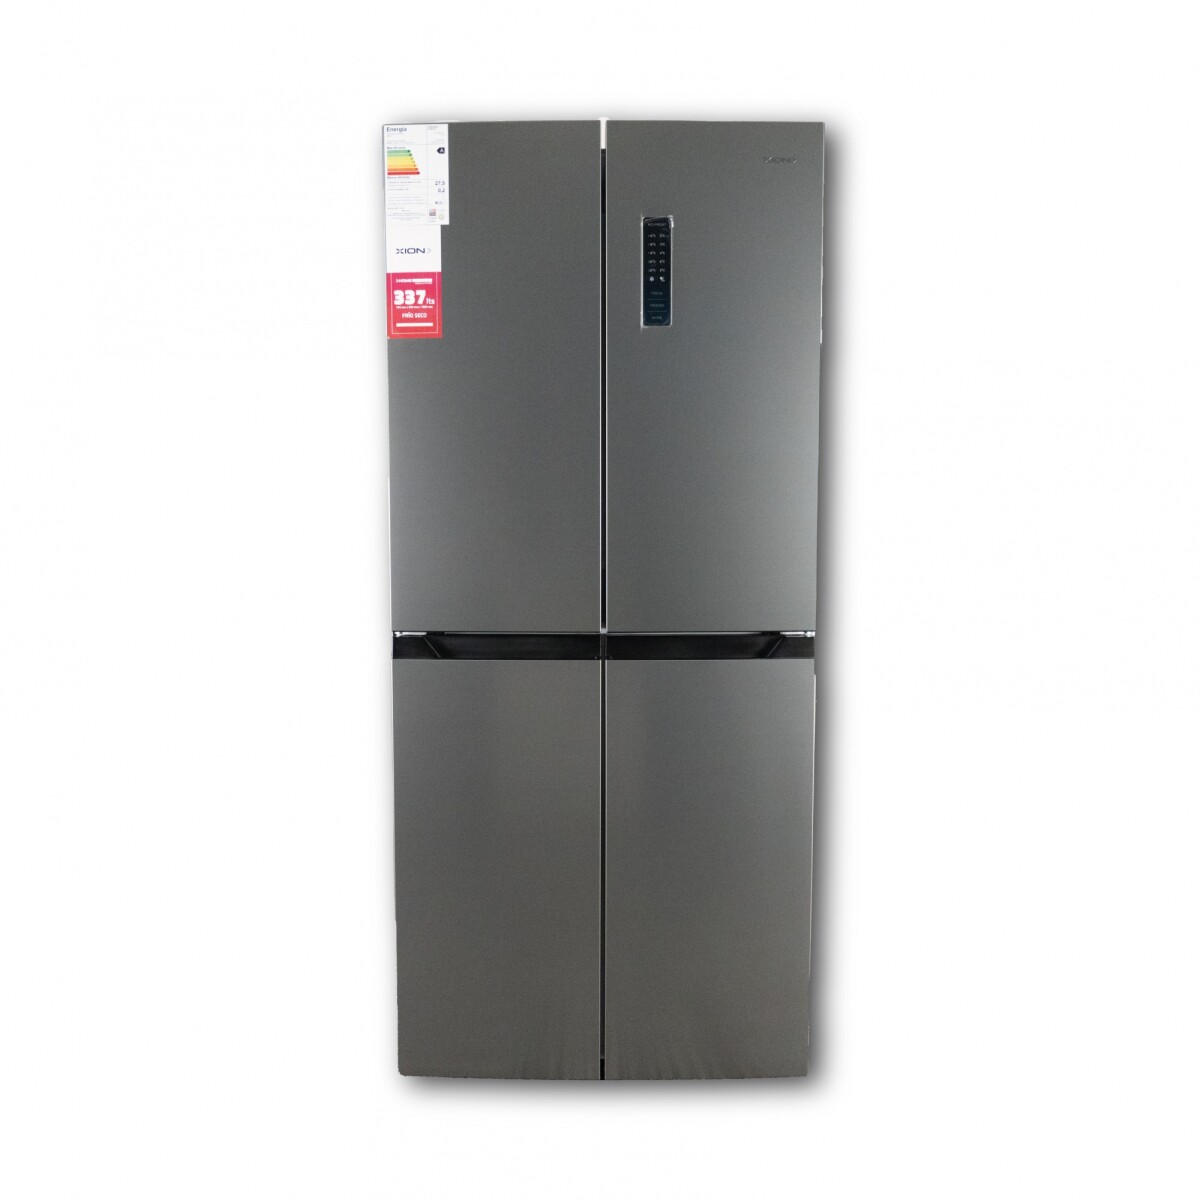 Refrigerador multi-door 337 Lts. 